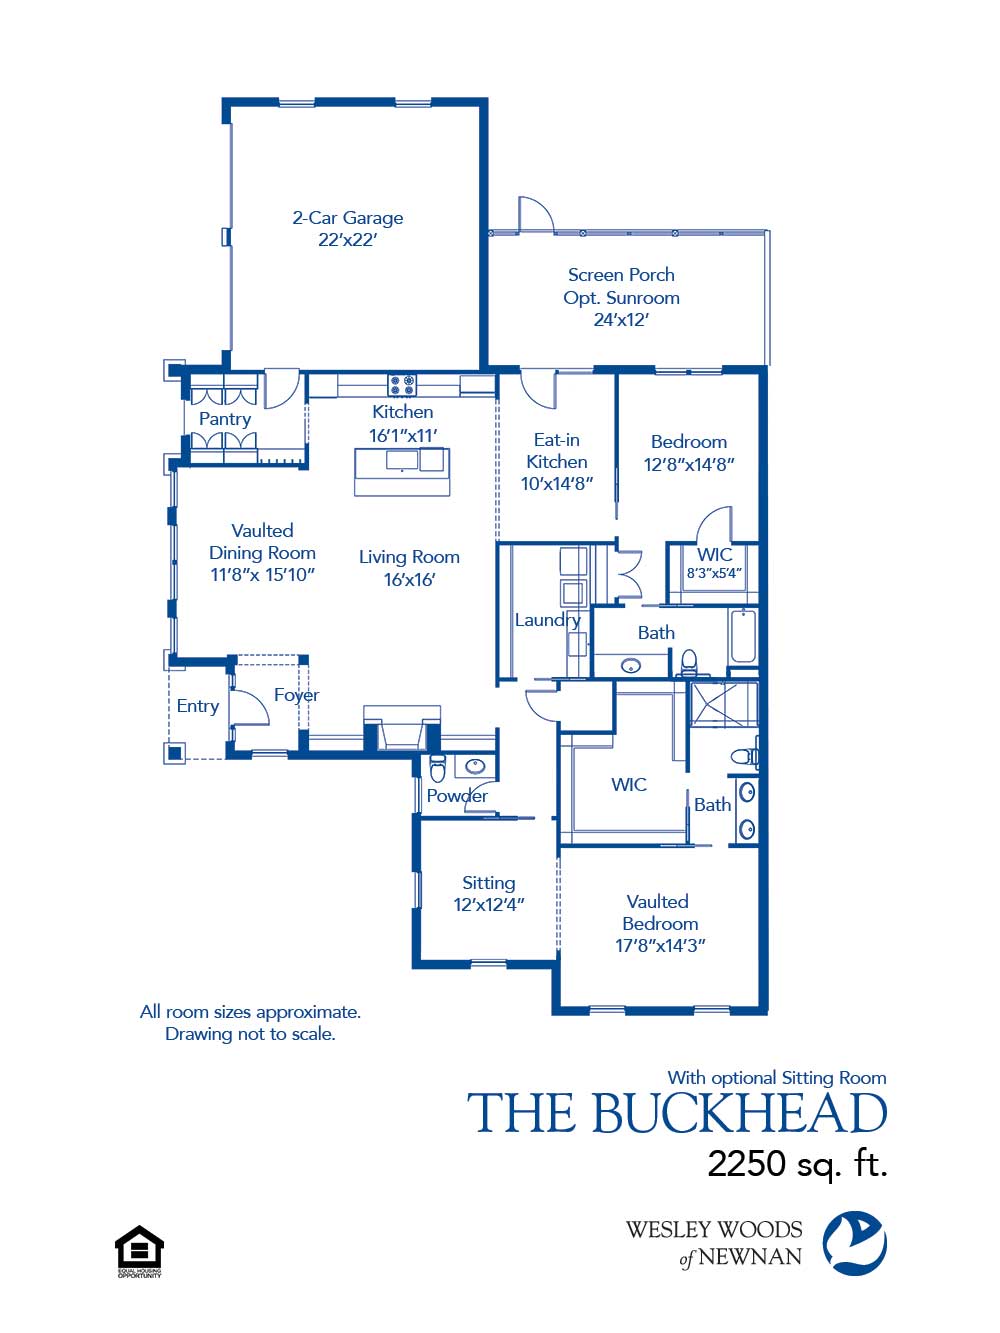 The Buckhead with optional sitting room floor plan